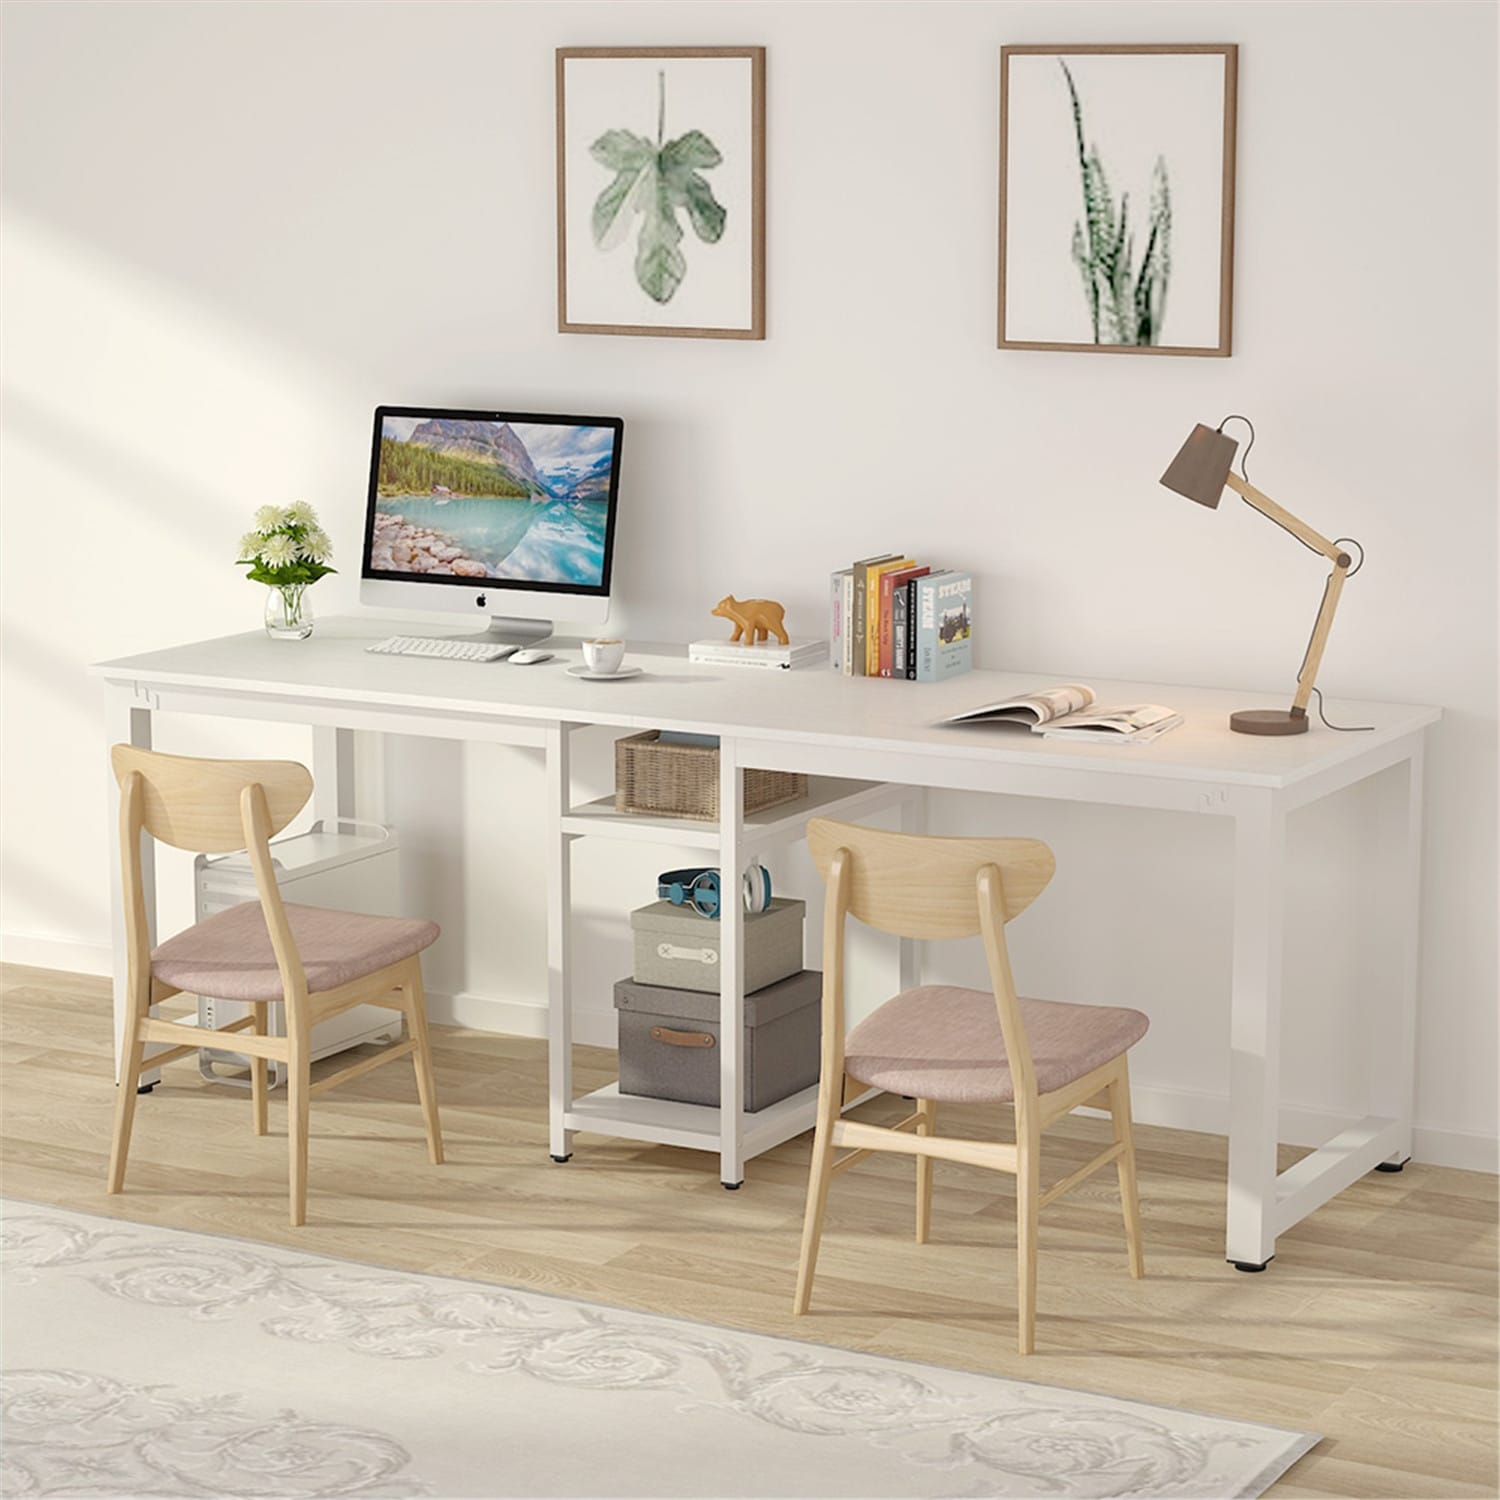 Computer Desk 40 inch Desk with 2-Tier Shelves Sturdy White Desk